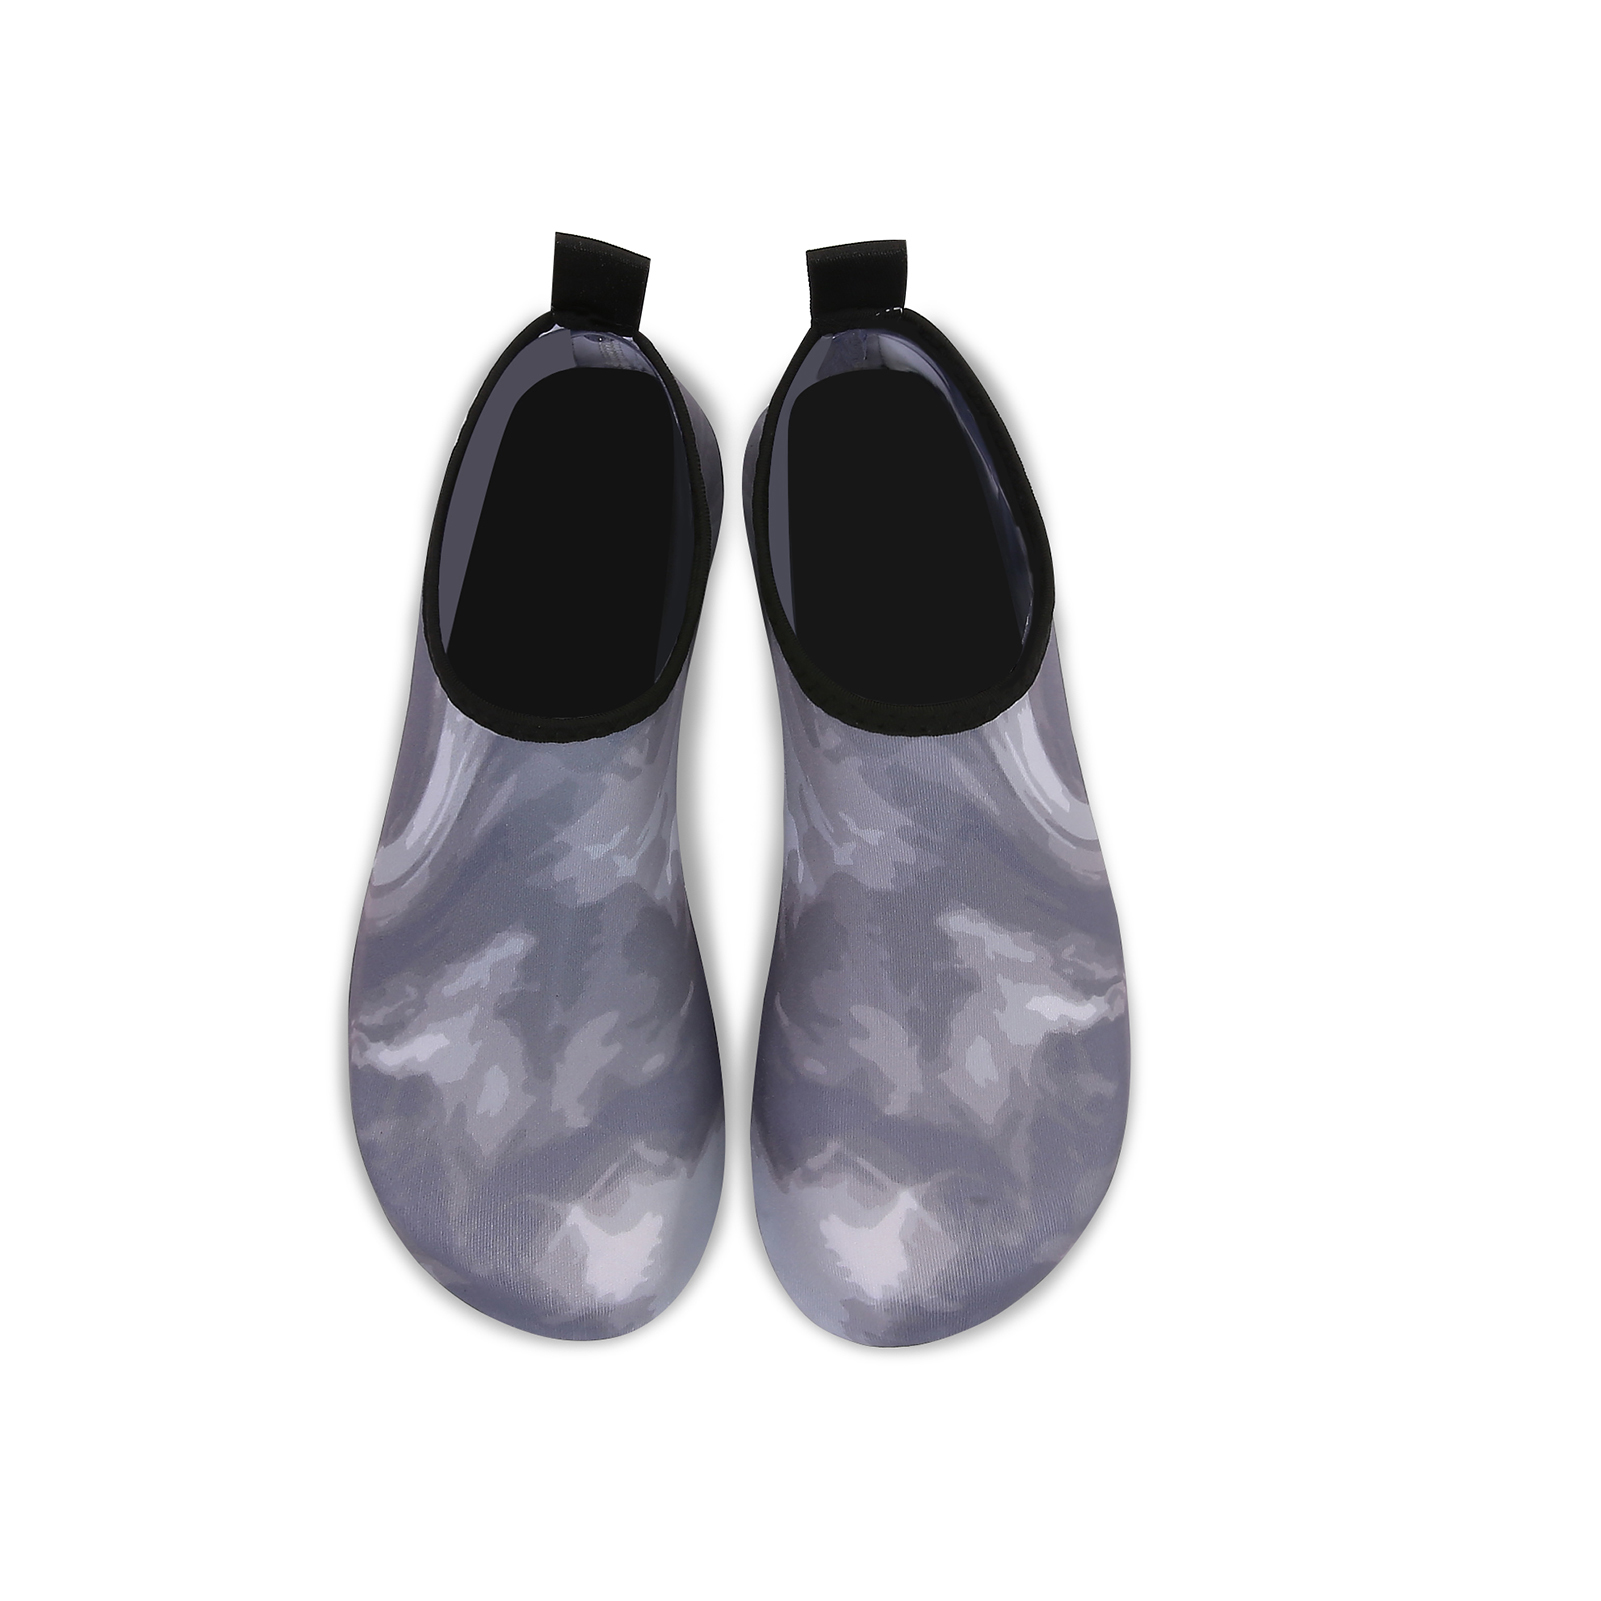 Men and Women a Slip On Barefoot Quick-Dry Beach Aqua Yoga Water Shoes (Fog/Grey, 13-14 Women/10.5-11 Men) - image 3 of 8